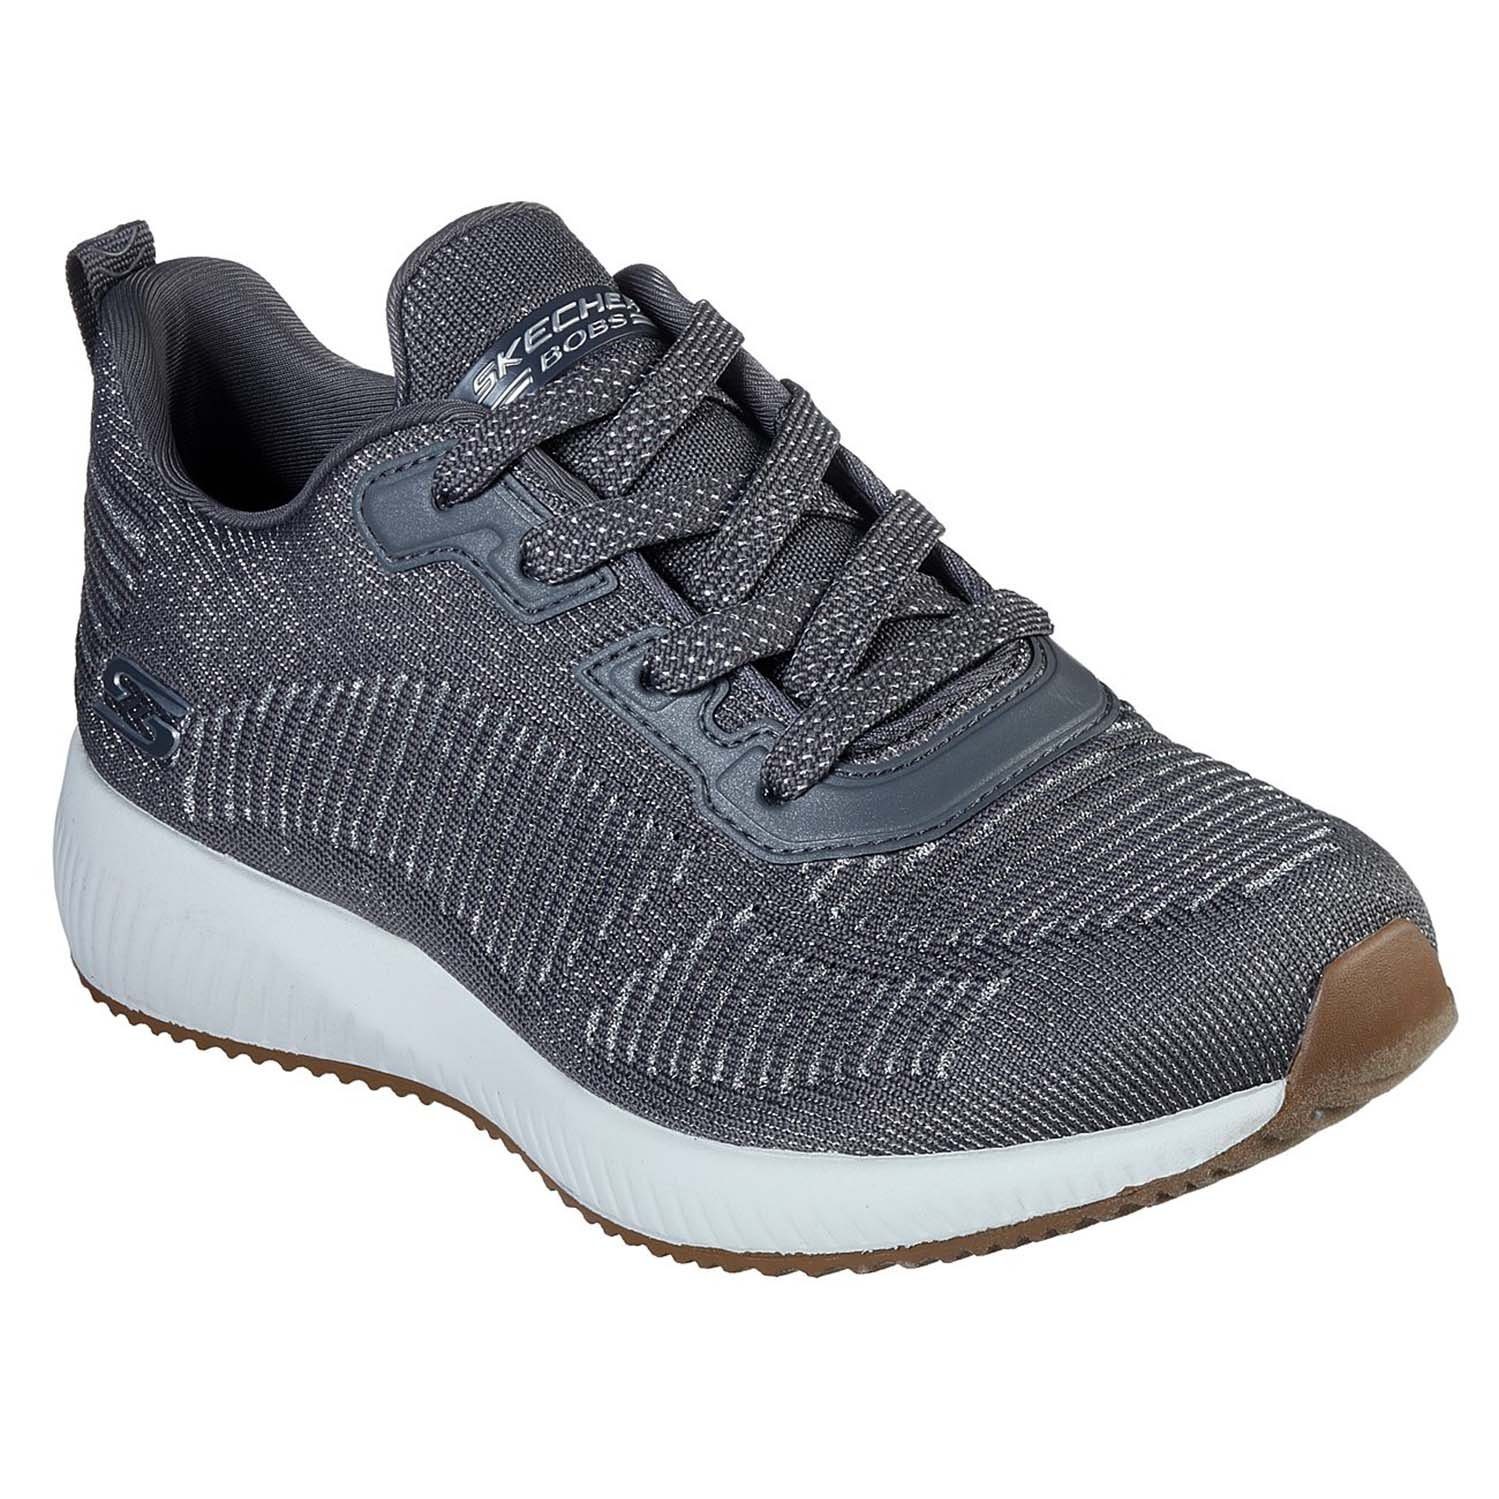 Skechers BOBS SQUAD GLAM LEAGUE Sneaker Grau (Grey Silver) (20202164)